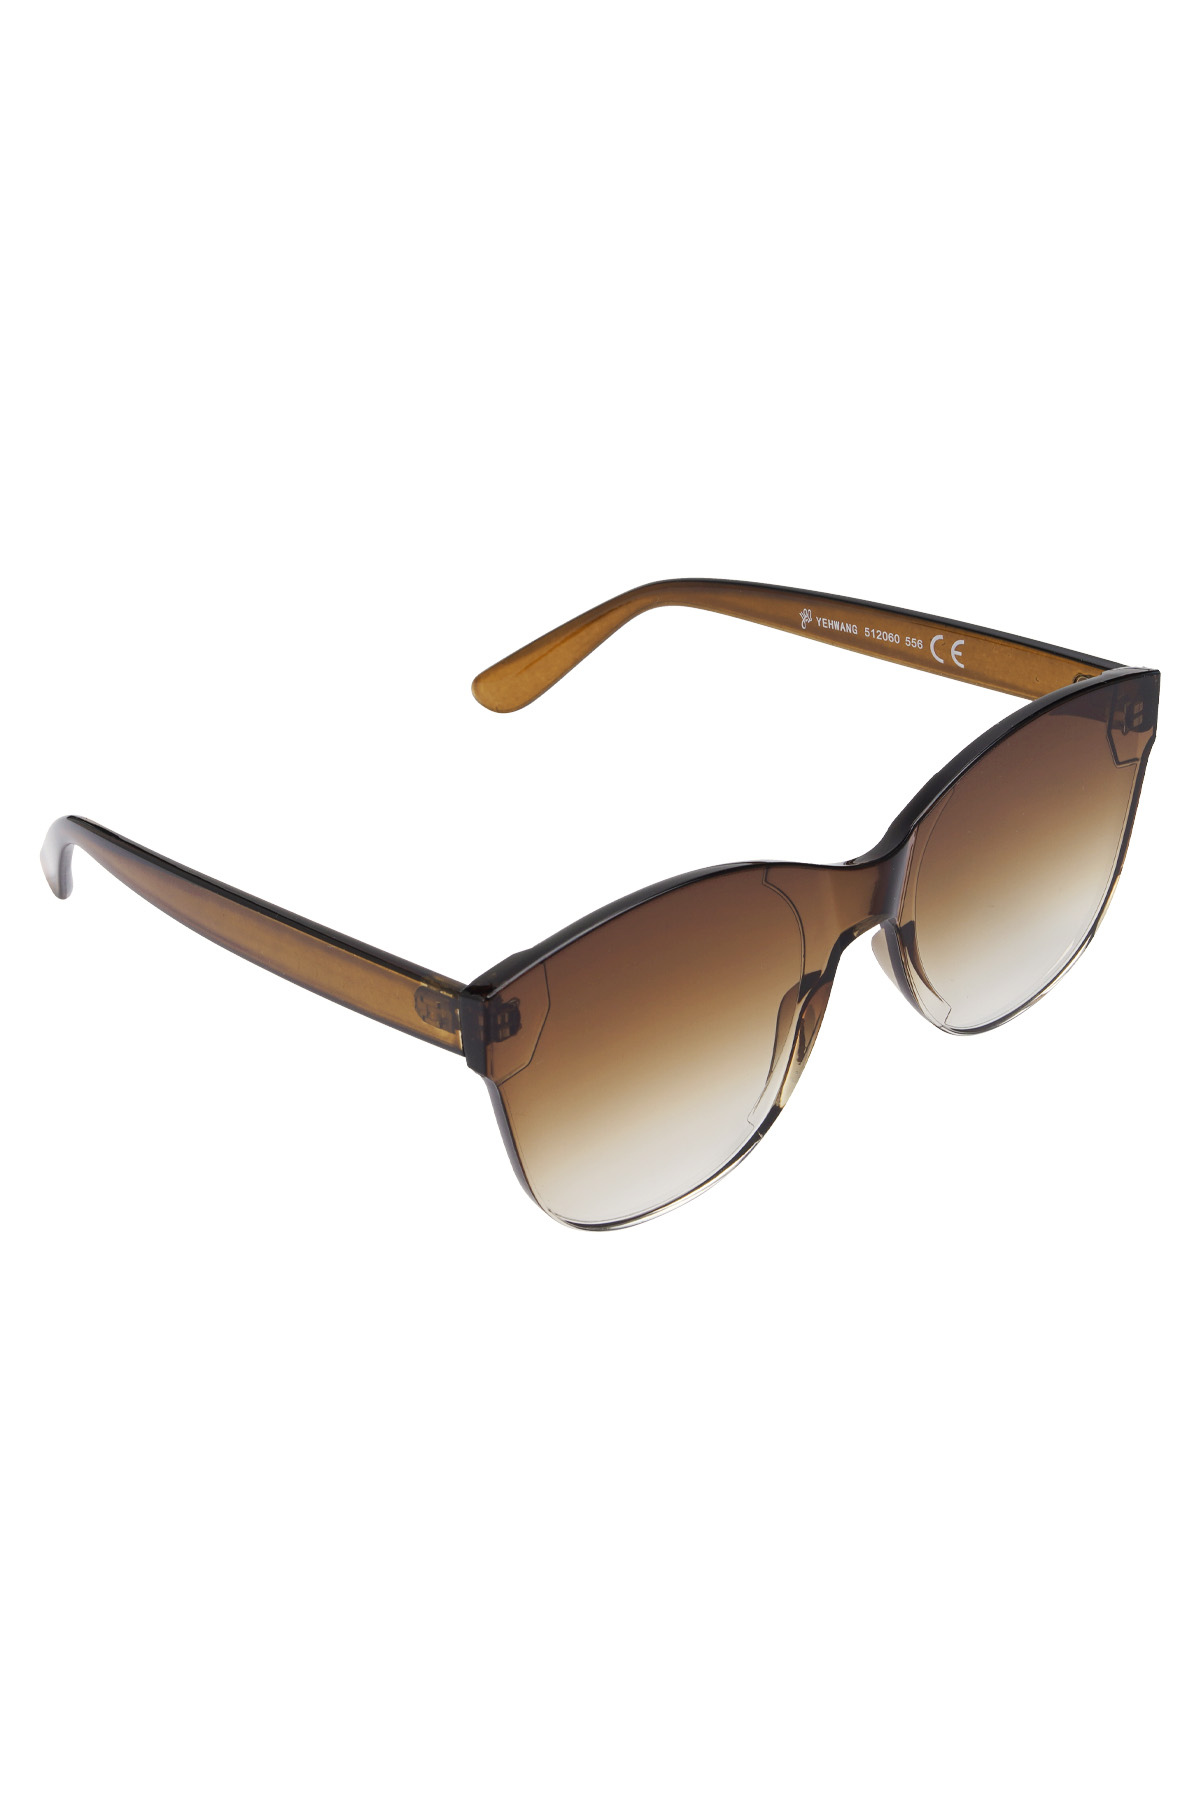 Single-color trendy sunglasses - brown